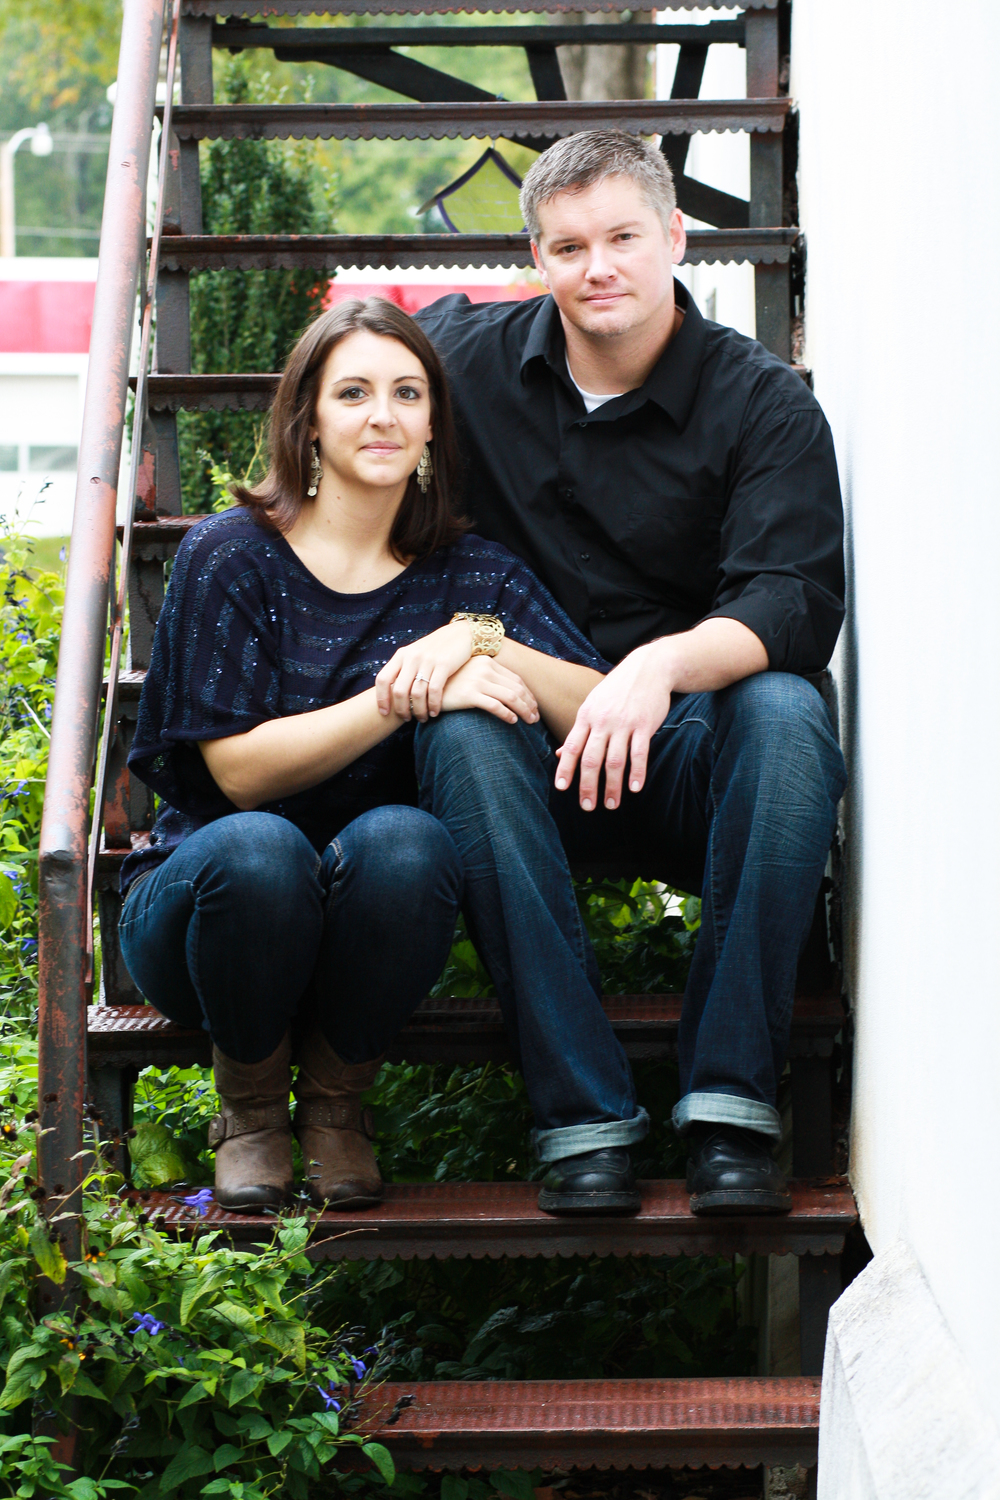 Pryse and Rachel Engagement Portrait on Steps